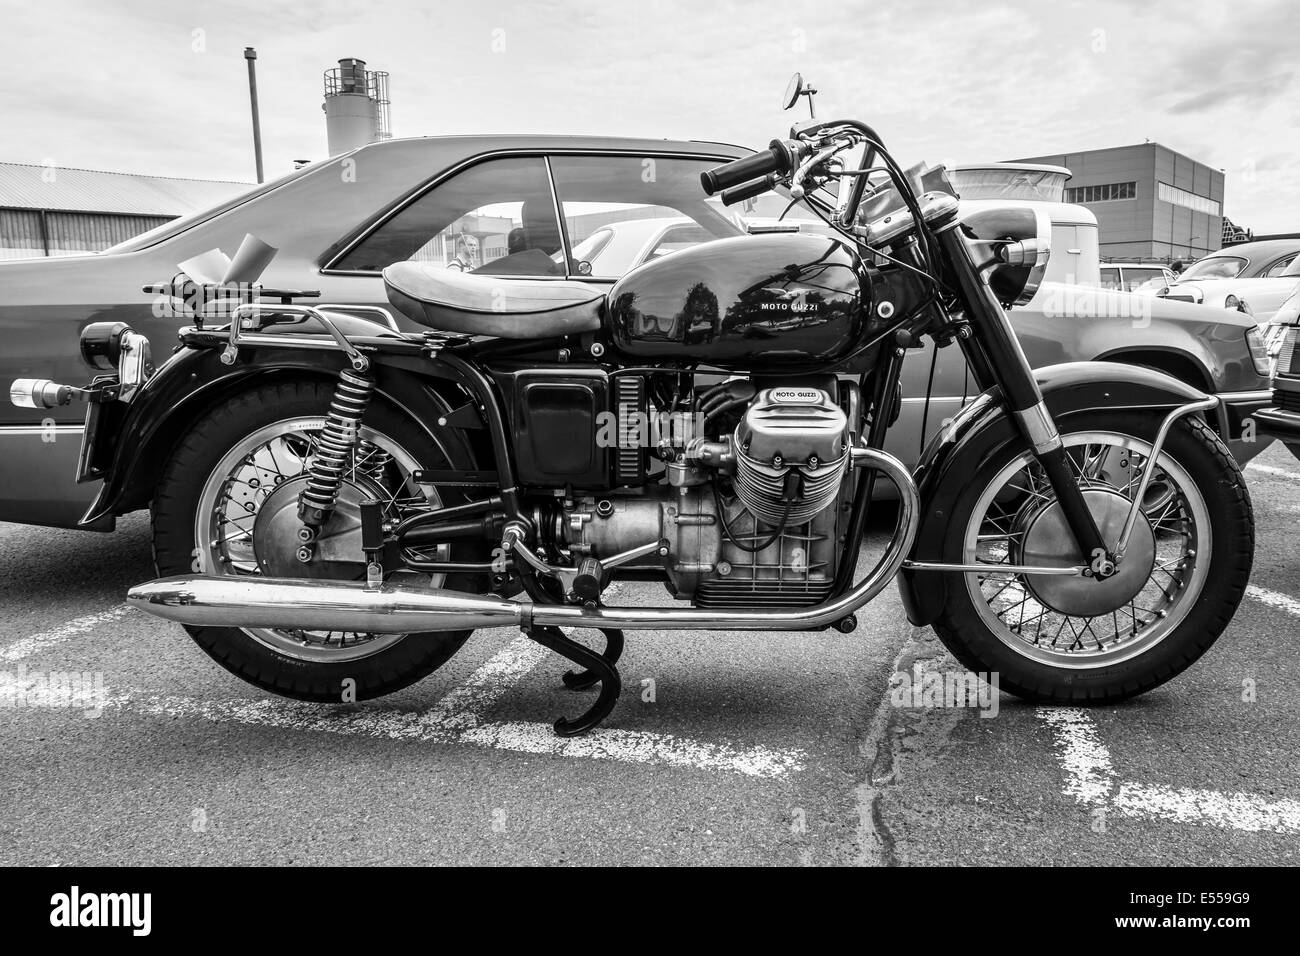 Moto guzzi motor bike hi-res stock photography and images - Alamy